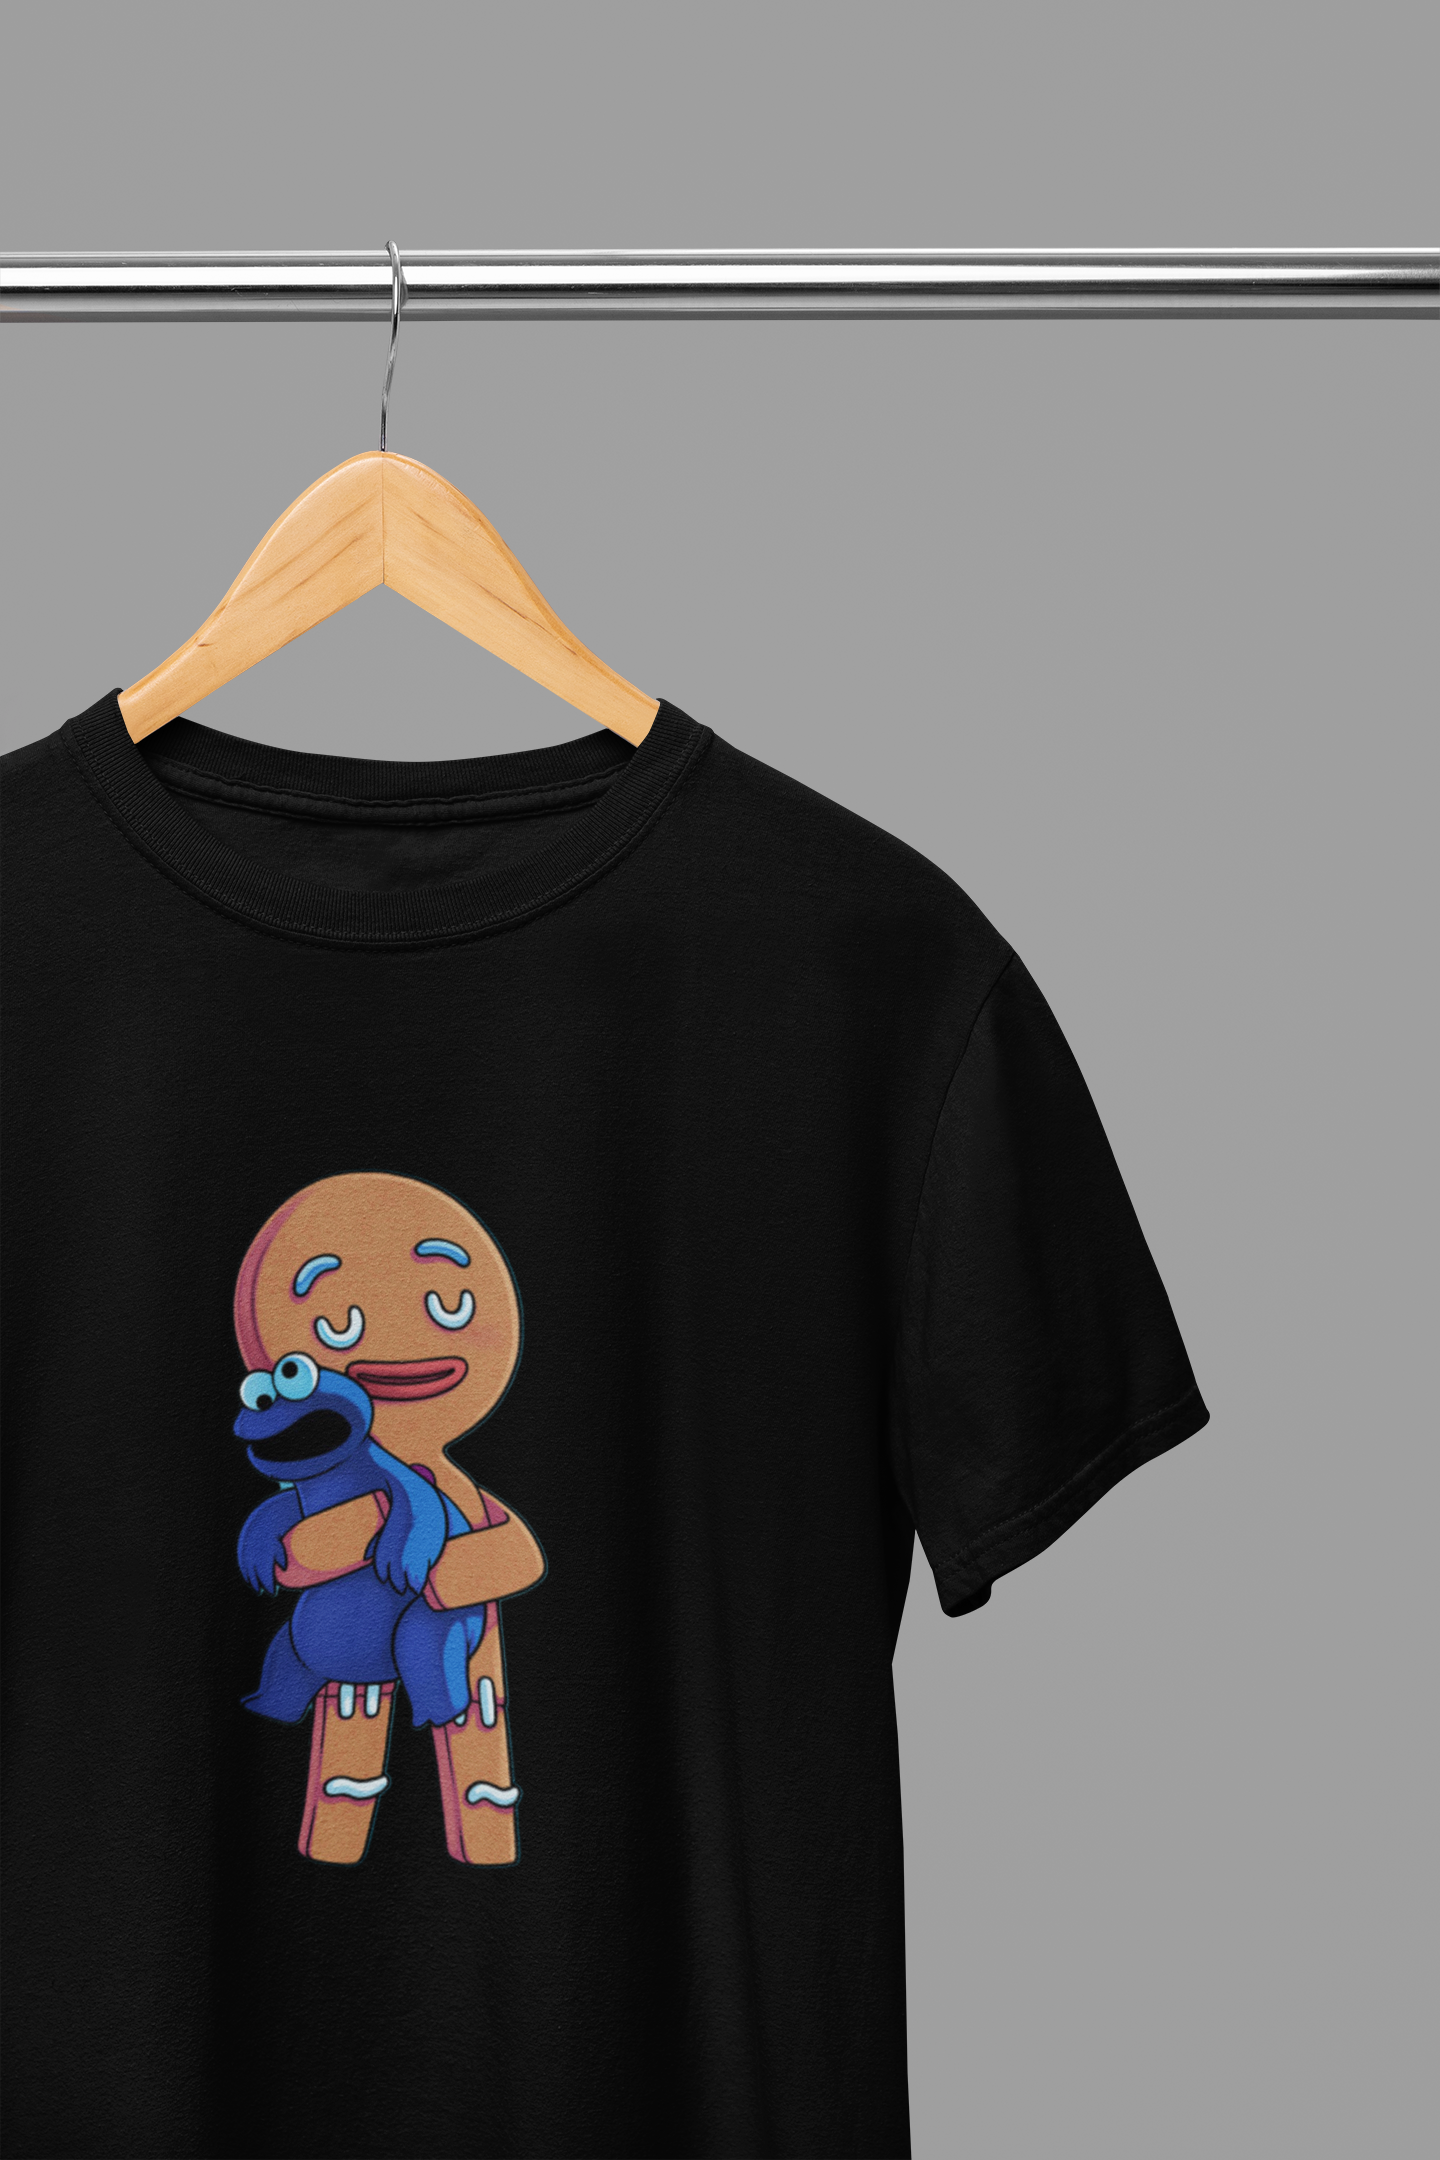 Gingerbread Man Cookie Monster Lover Chucky Childs Play T-Shirt/Sweatshirt